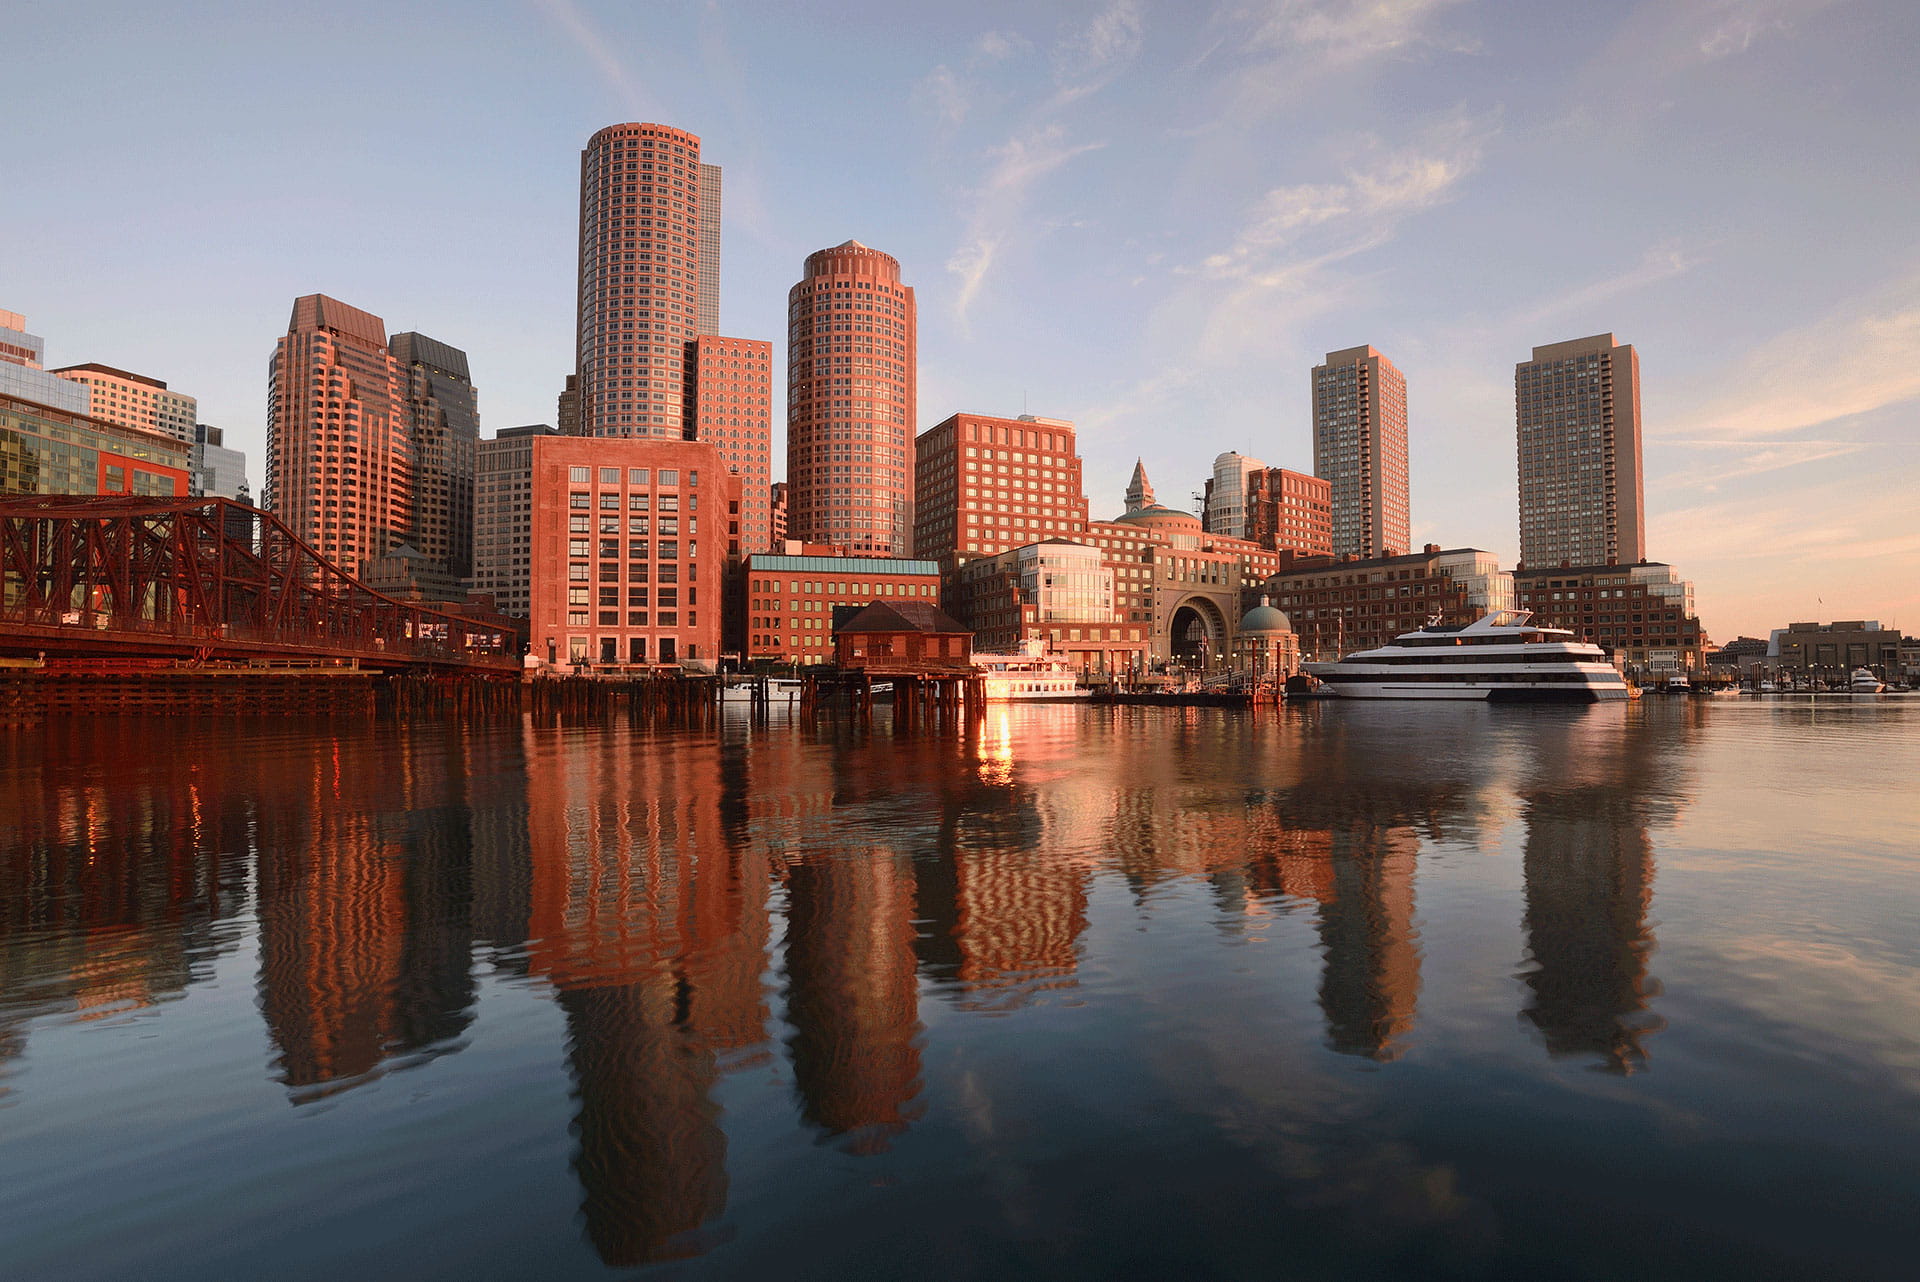 Bird's eye view of Boston